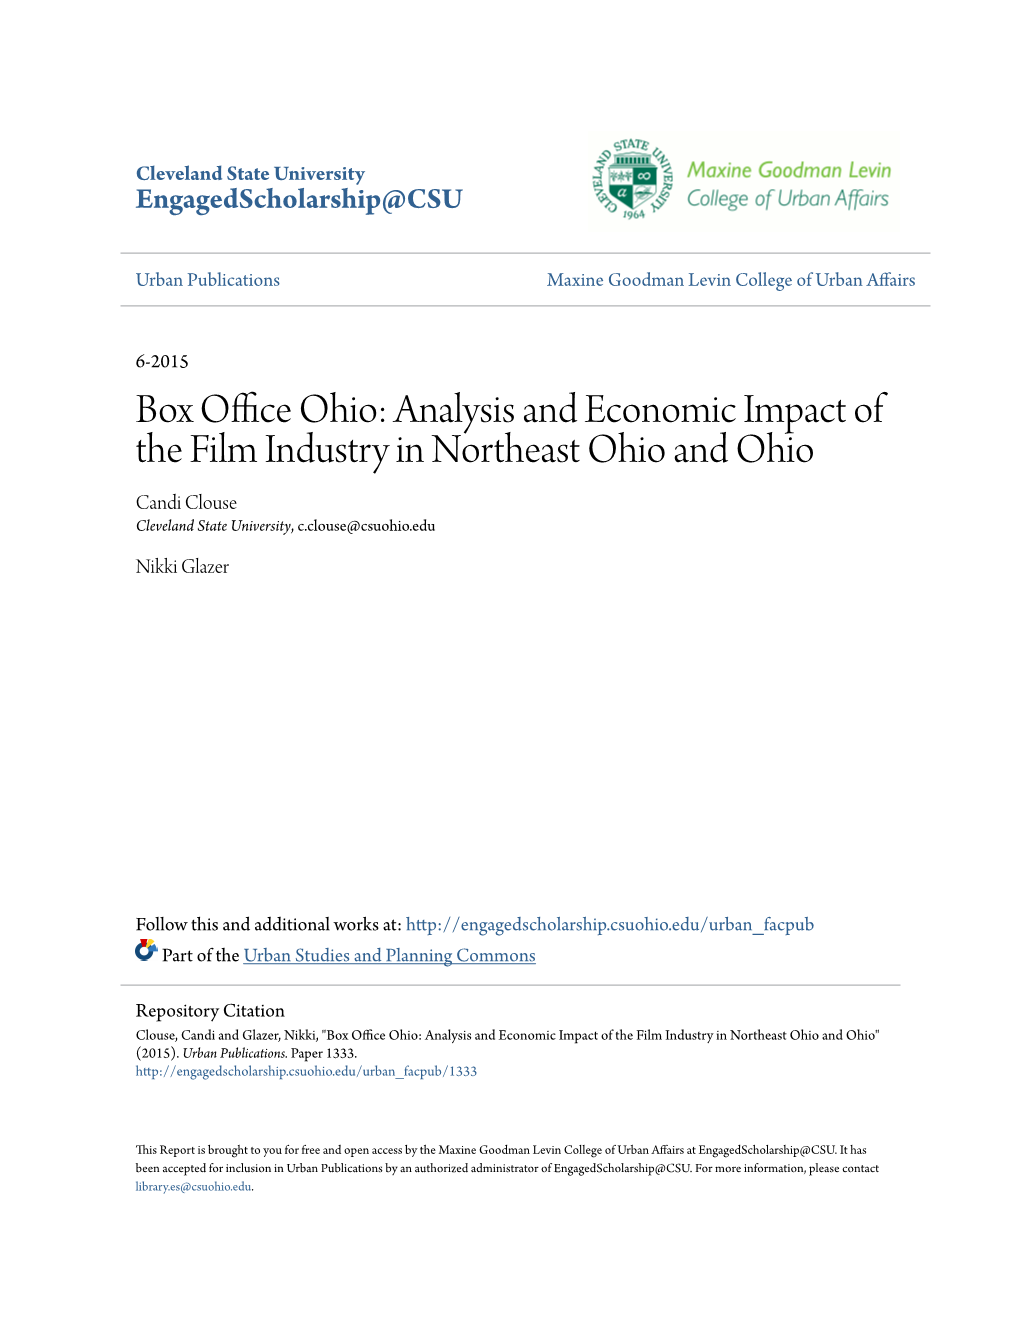 Analysis and Economic Impact of the Film Industry in Northeast Ohio and Ohio Candi Clouse Cleveland State University, C.Clouse@Csuohio.Edu